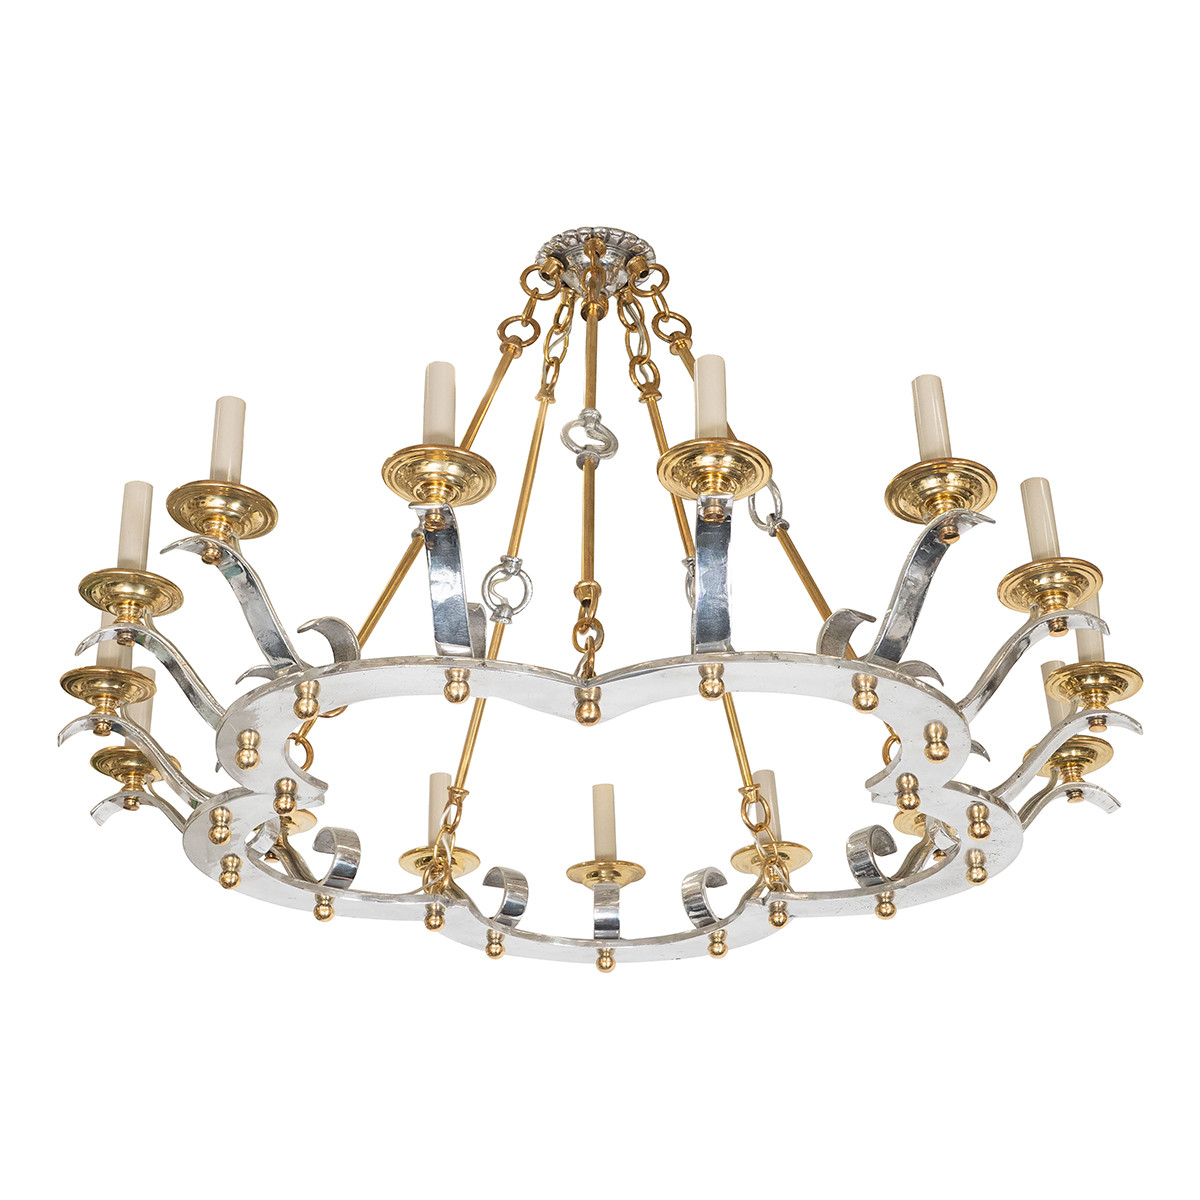 Cast brass and aluminum chandelier